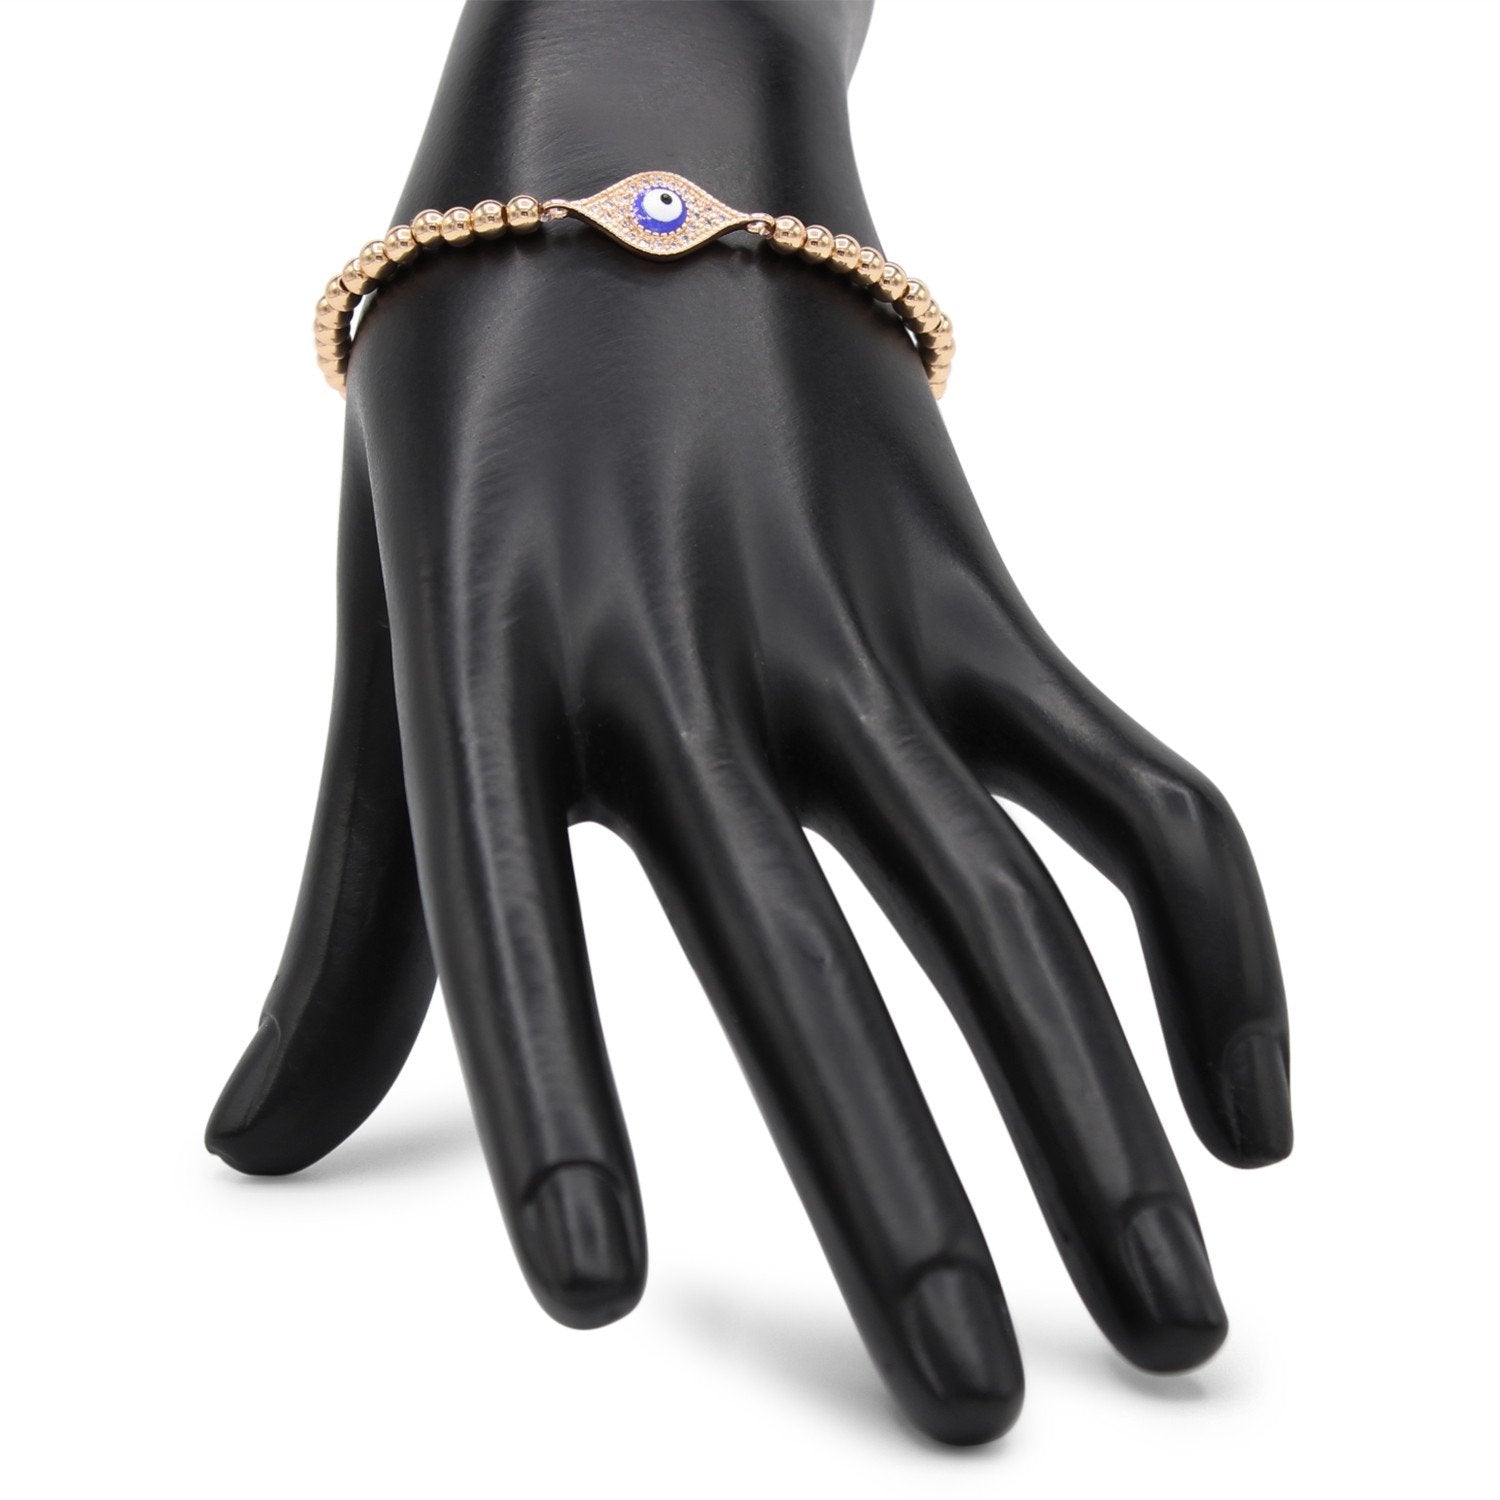 Wrist Jewelry Gift For Women